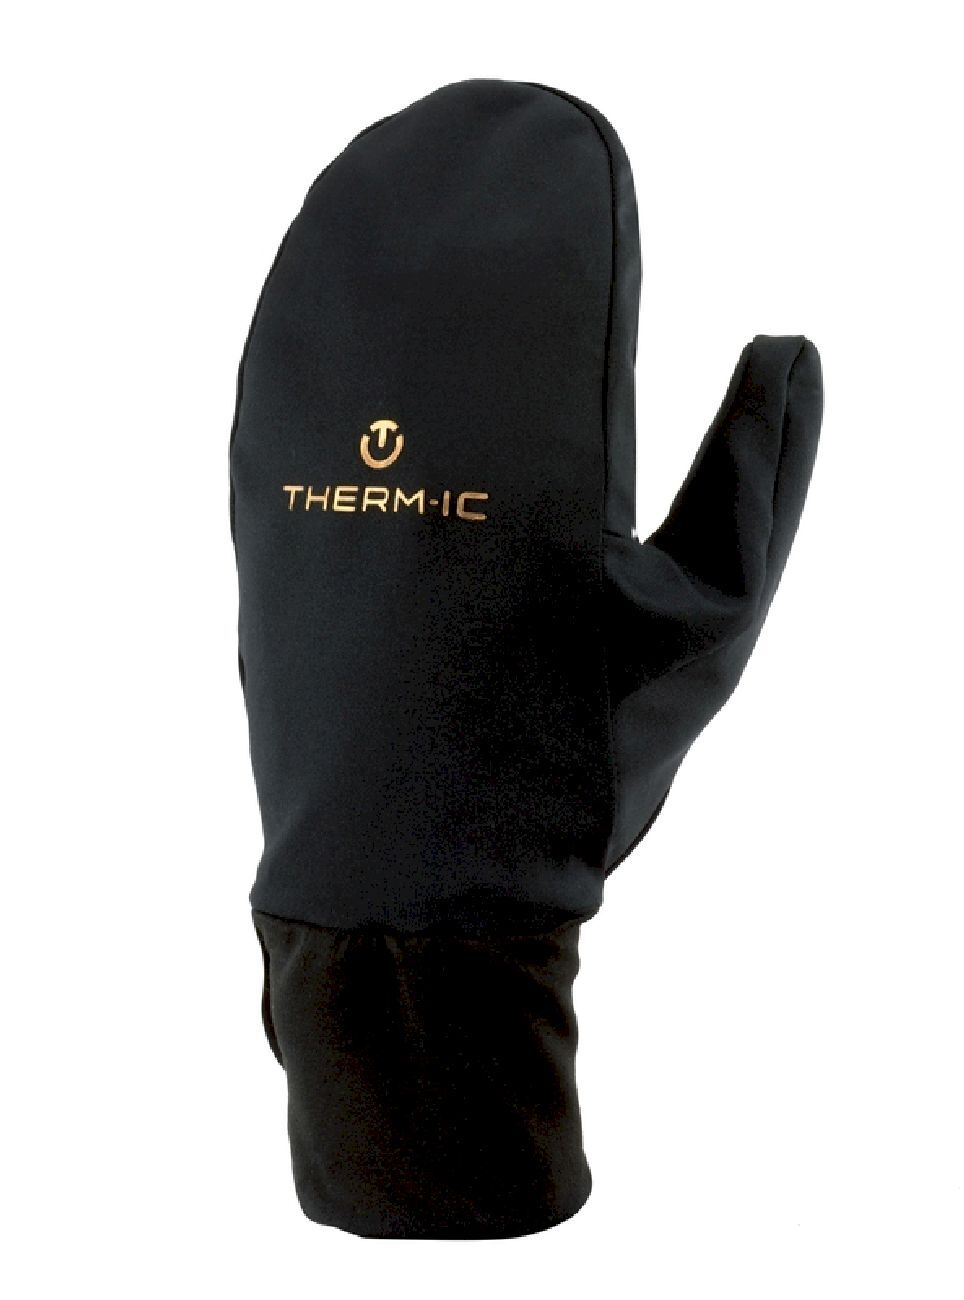 Therm-Ic Versatile Light Gloves - Running gloves